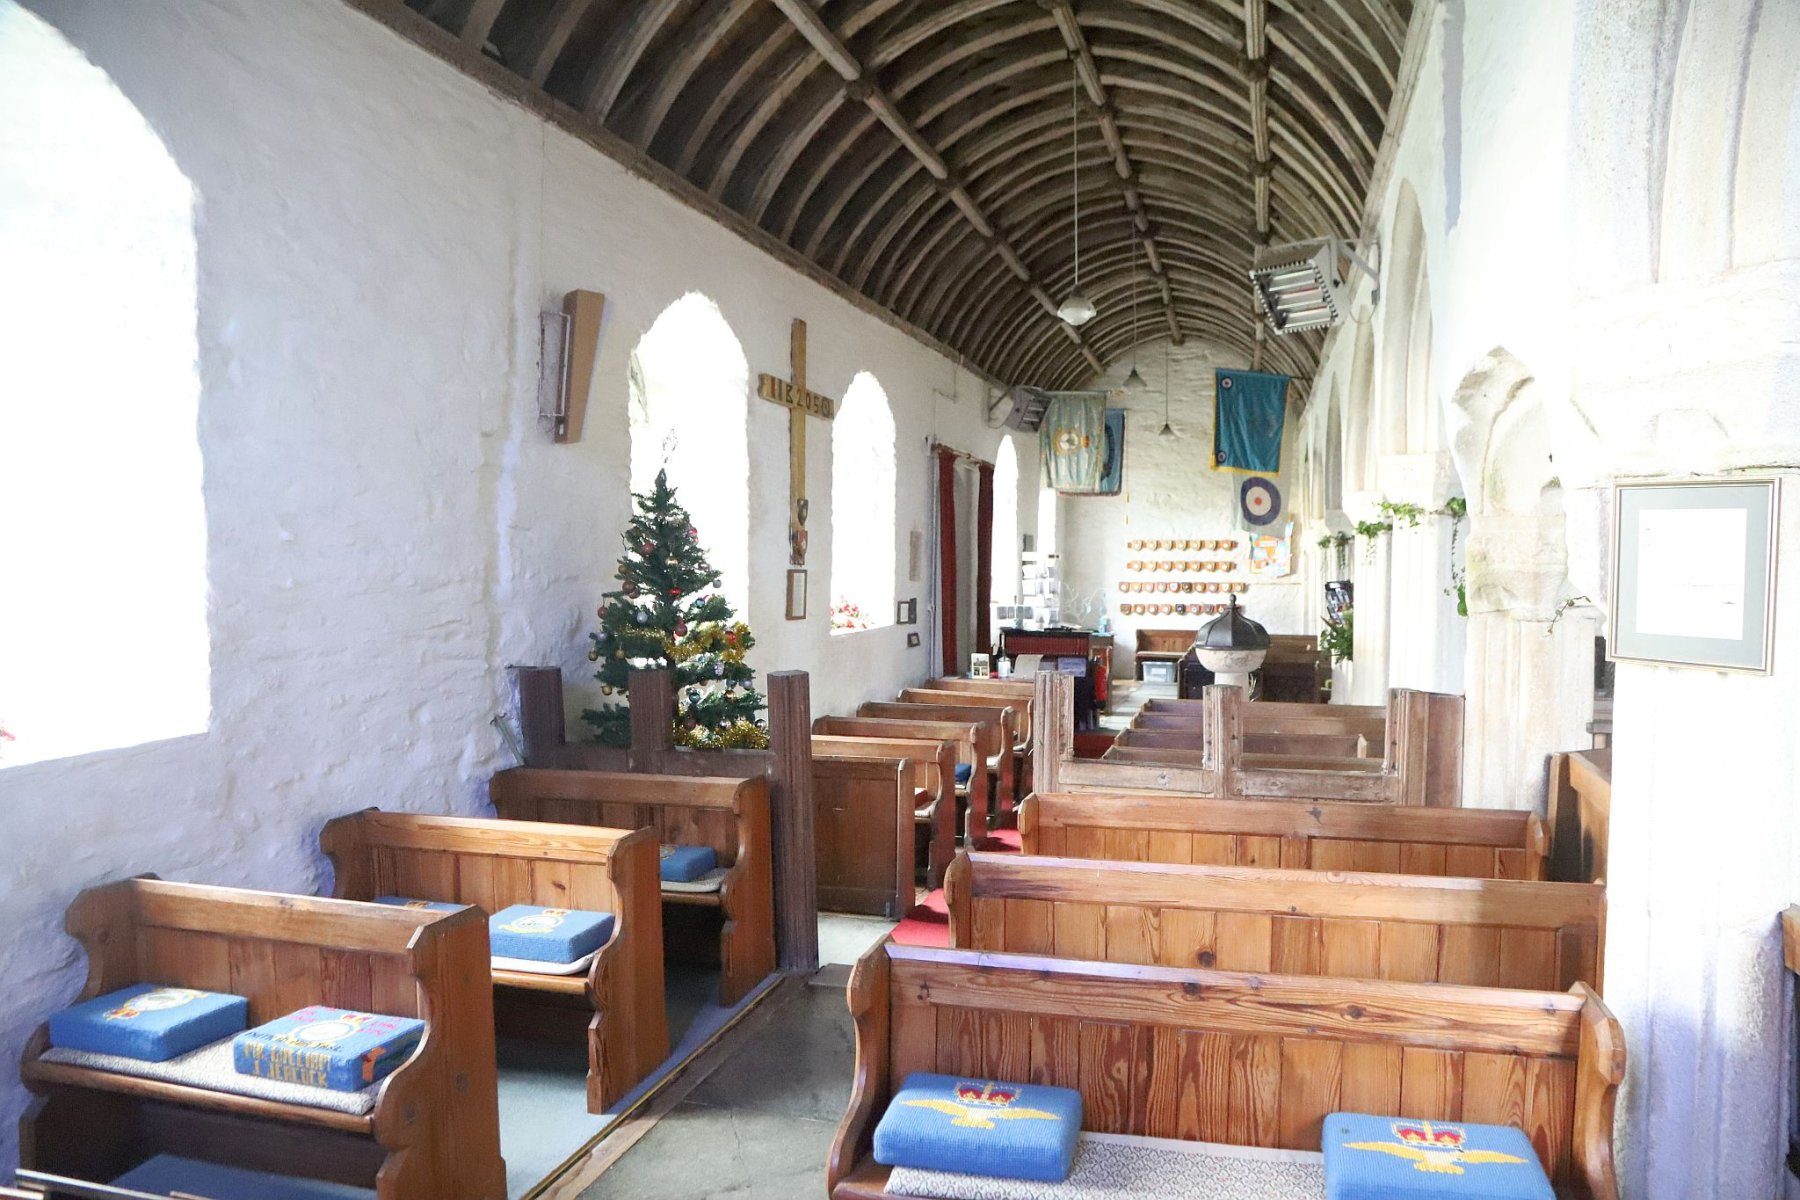 Southern aisle at St. Eval Parish Church near Newquay in Cornwall